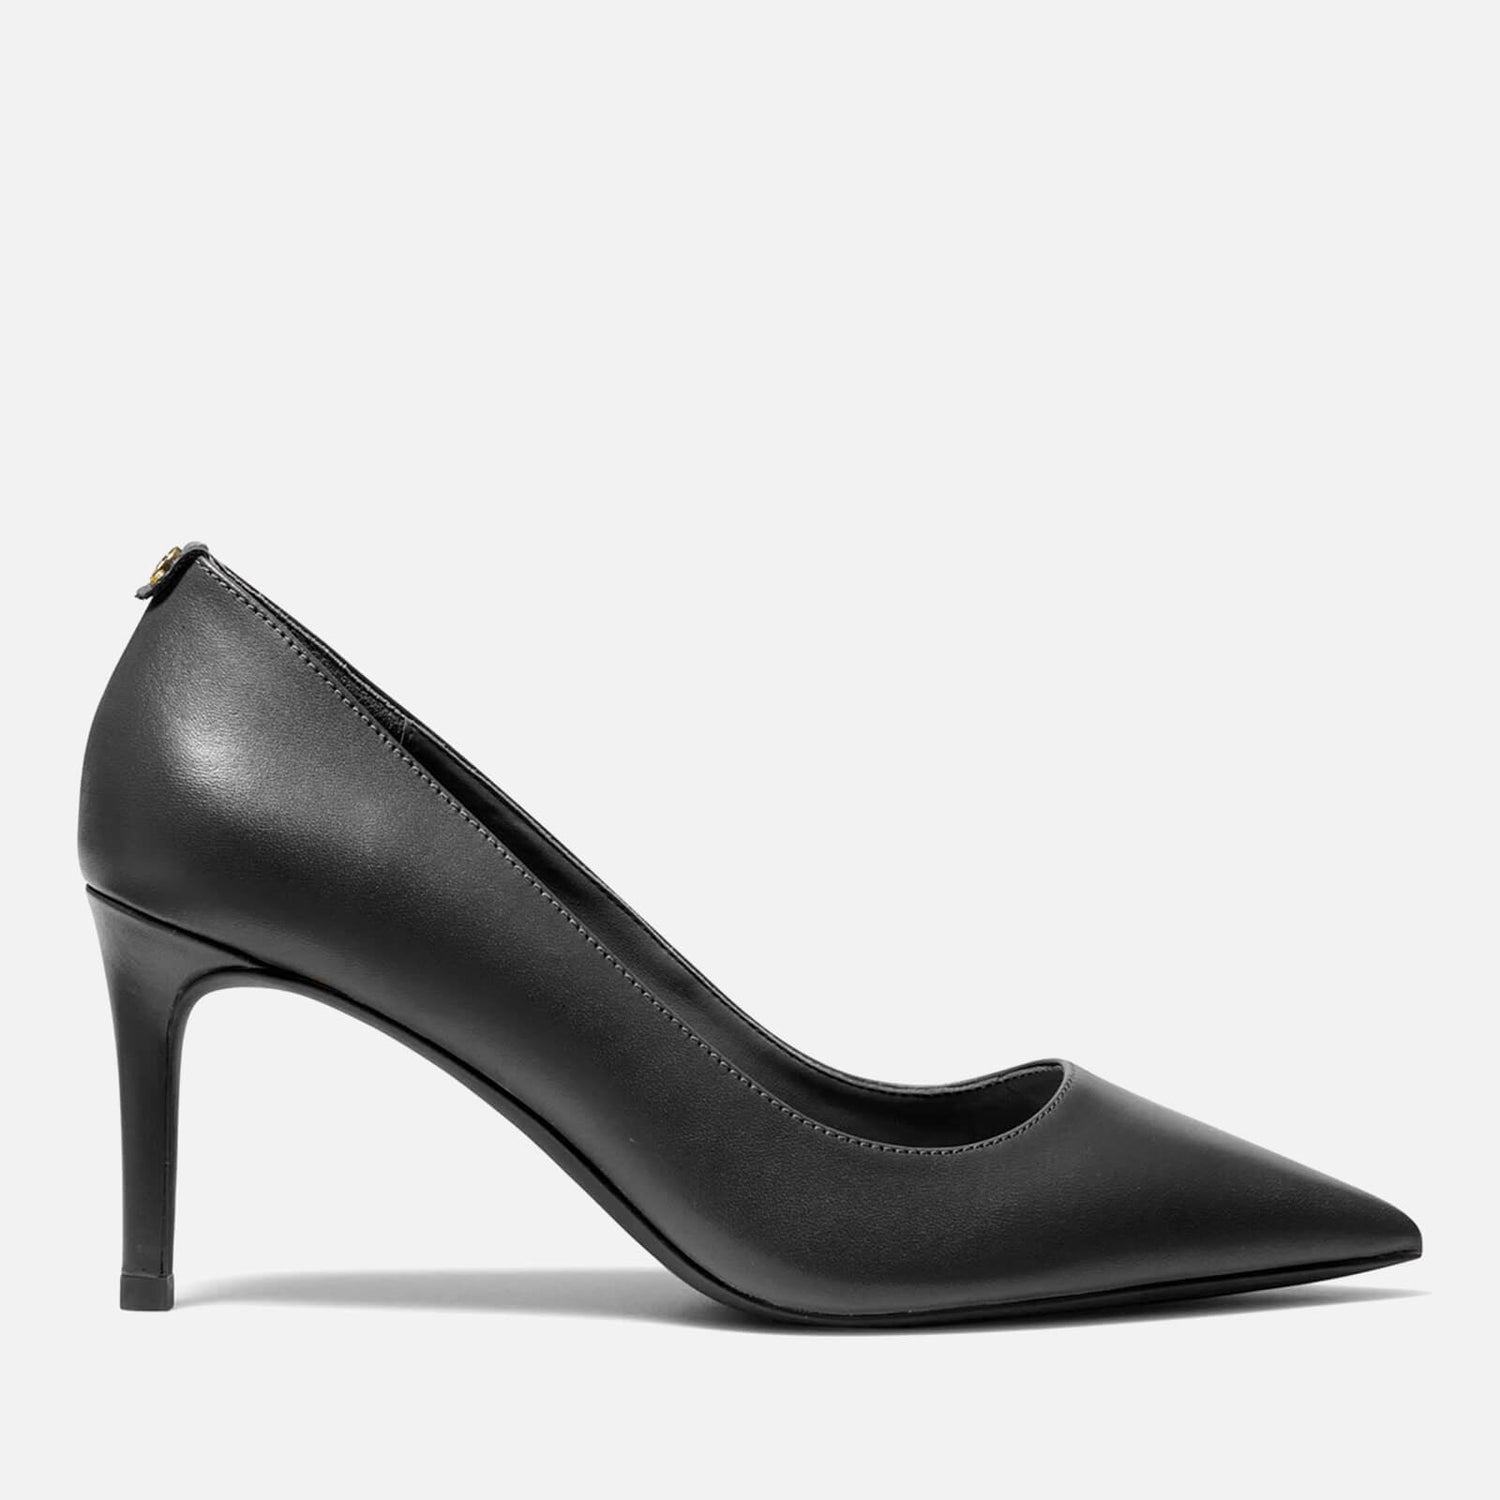 MICHAEL Michael Kors Women's Alina Leather Court Shoes - UK 5